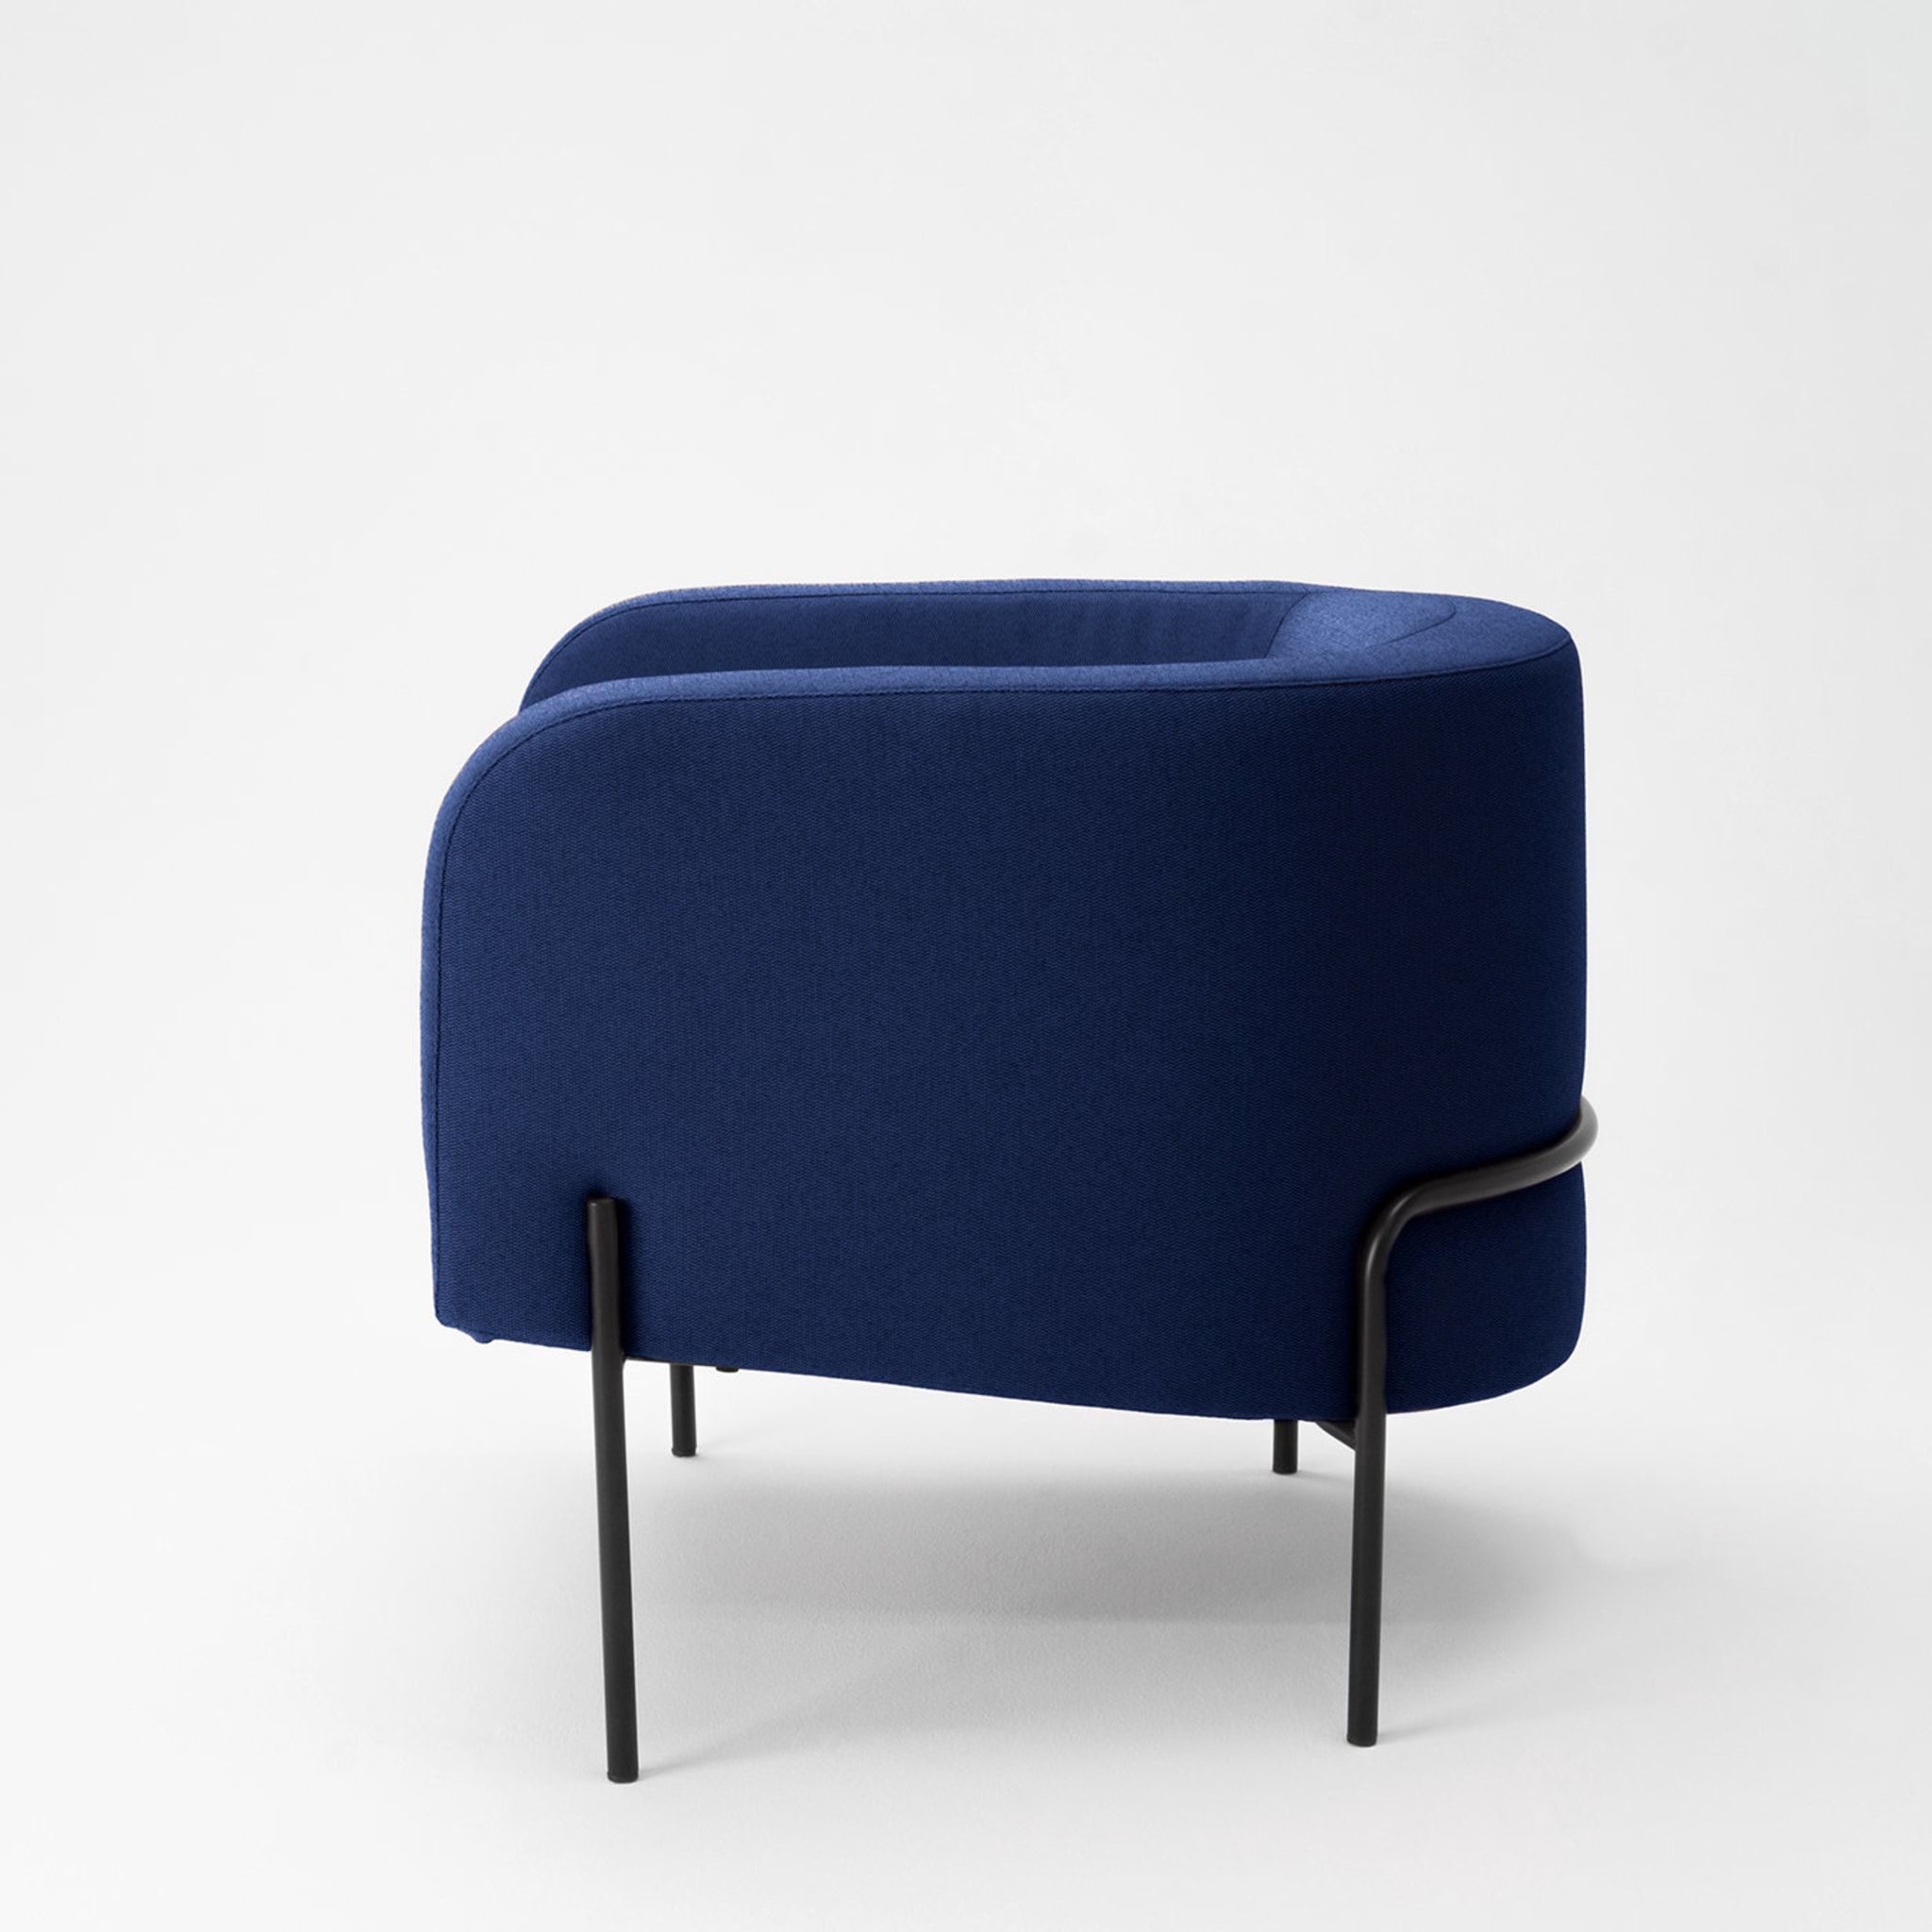 Blauer Laetitia-Sessel von Fabio Fantolino - Alternative Ansicht 1